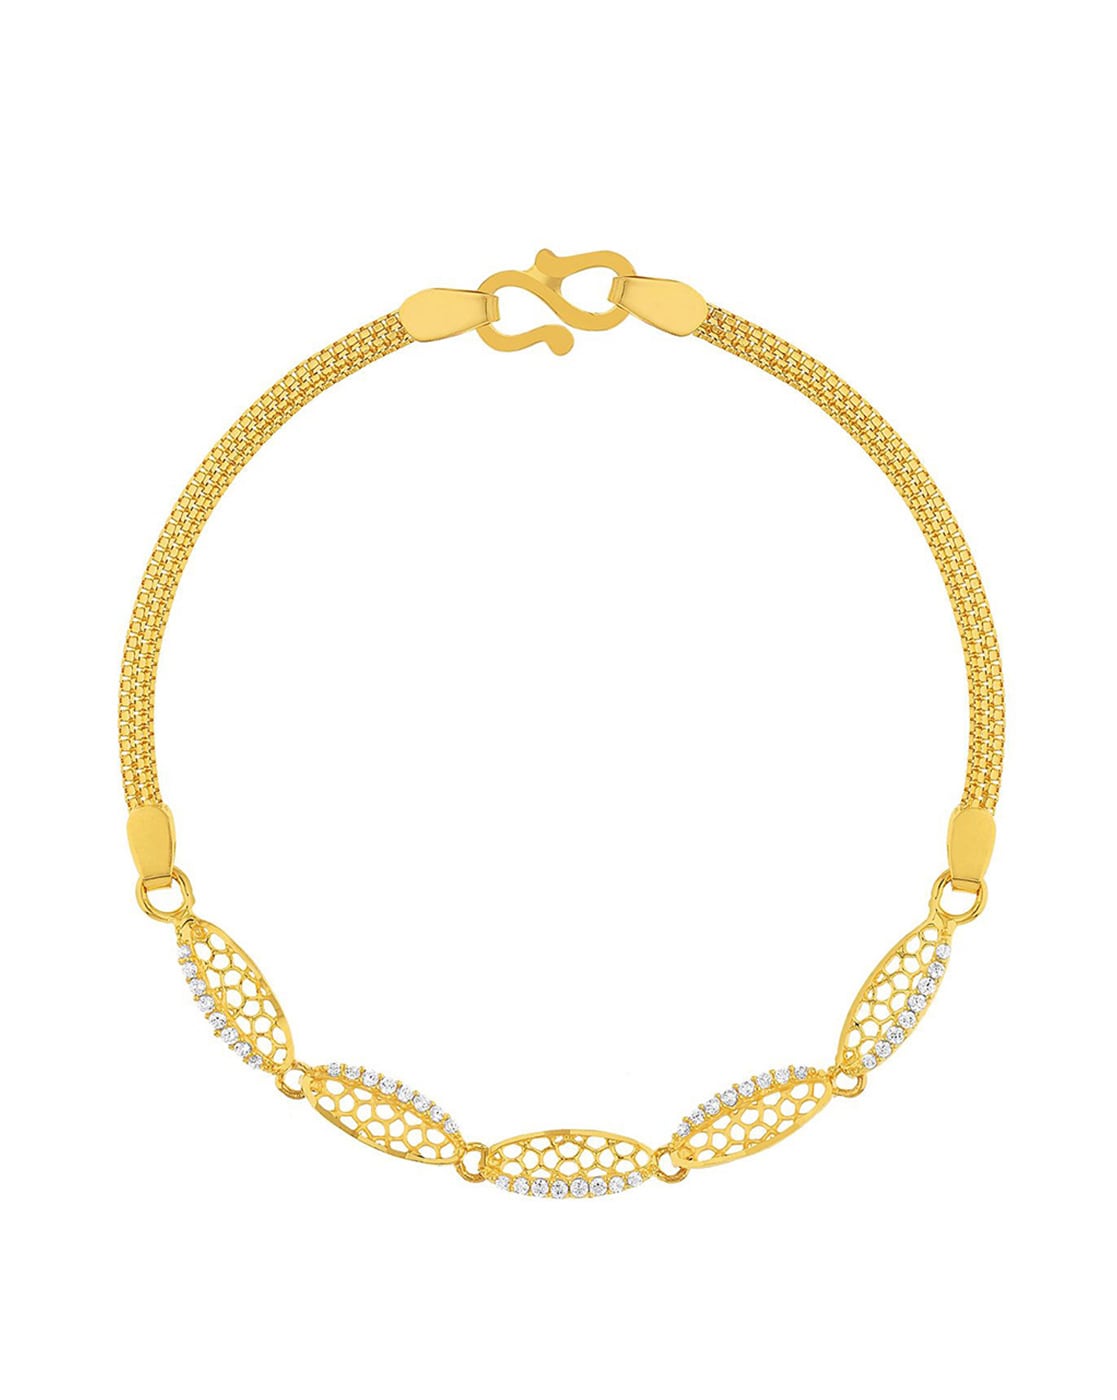 Malabar Gold & Diamonds 22 Kt (916) Purity Yellow Gold Bracelet Skg282 For  Women : Amazon.in: Fashion